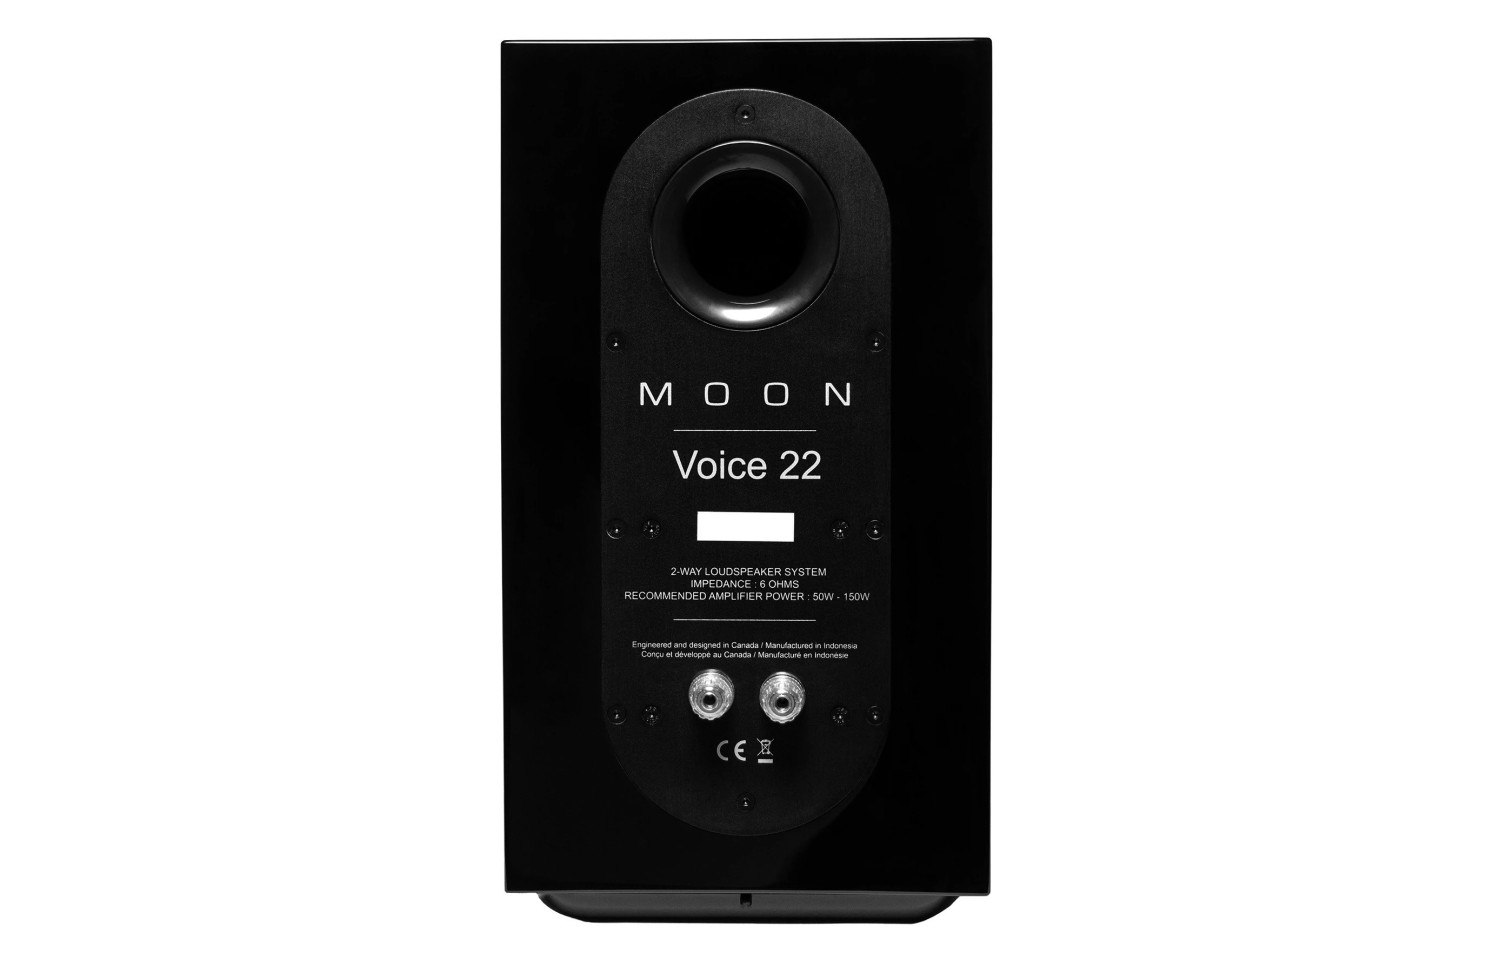 Moon voice 22 | ConcertoAudio.com